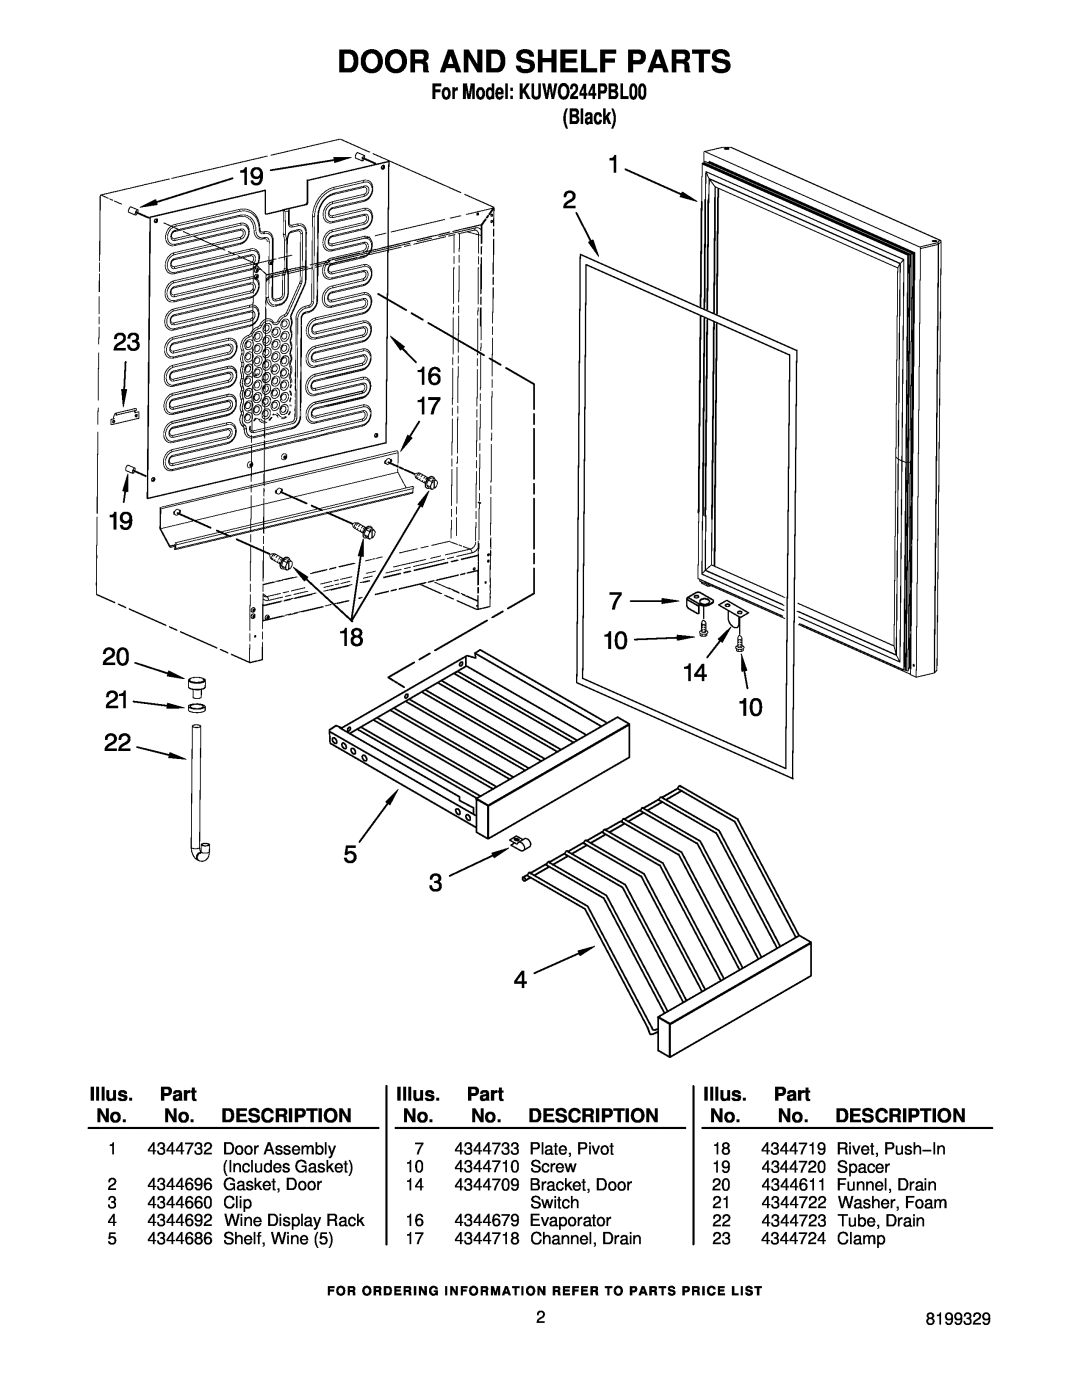 KitchenAid KUWO244PBL00 manual Door And Shelf Parts, Illus. Part No. No. DESCRIPTION 